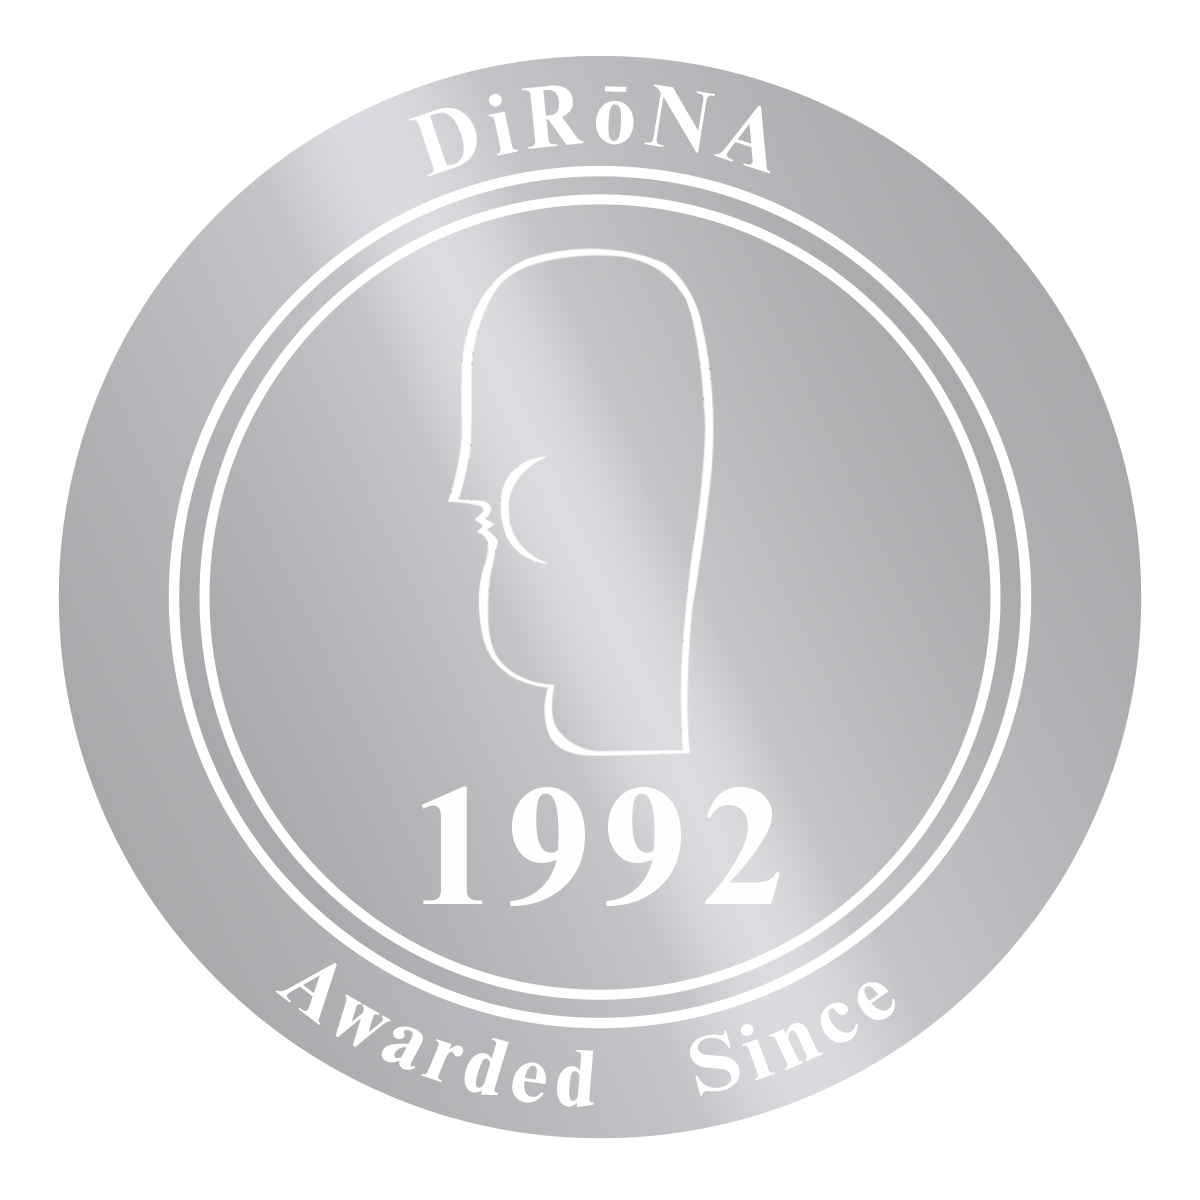 DiRoNA Awarded Restaurant Distinguished Restaurants of North America Badge